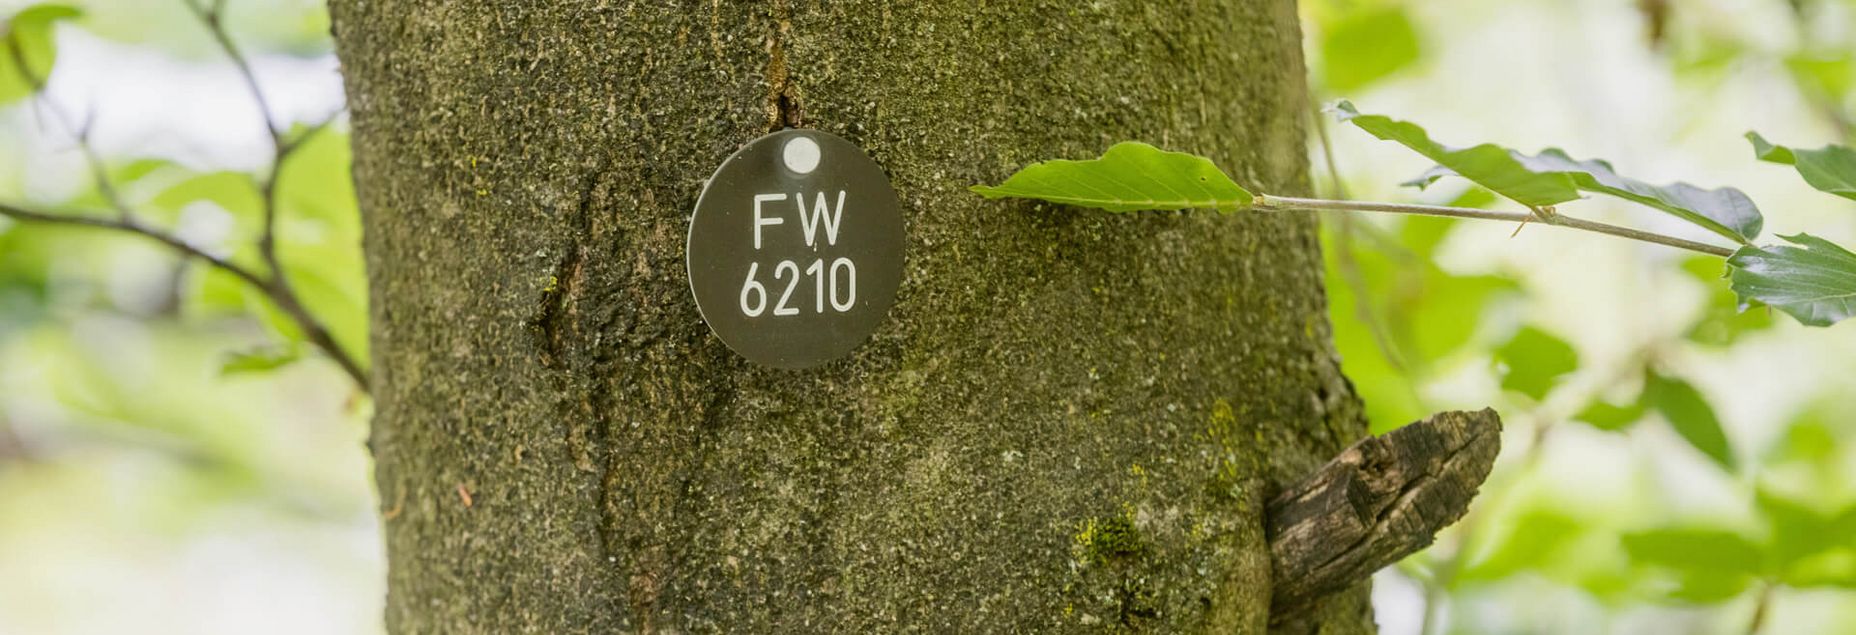 Baum FW 6210 - Plakette